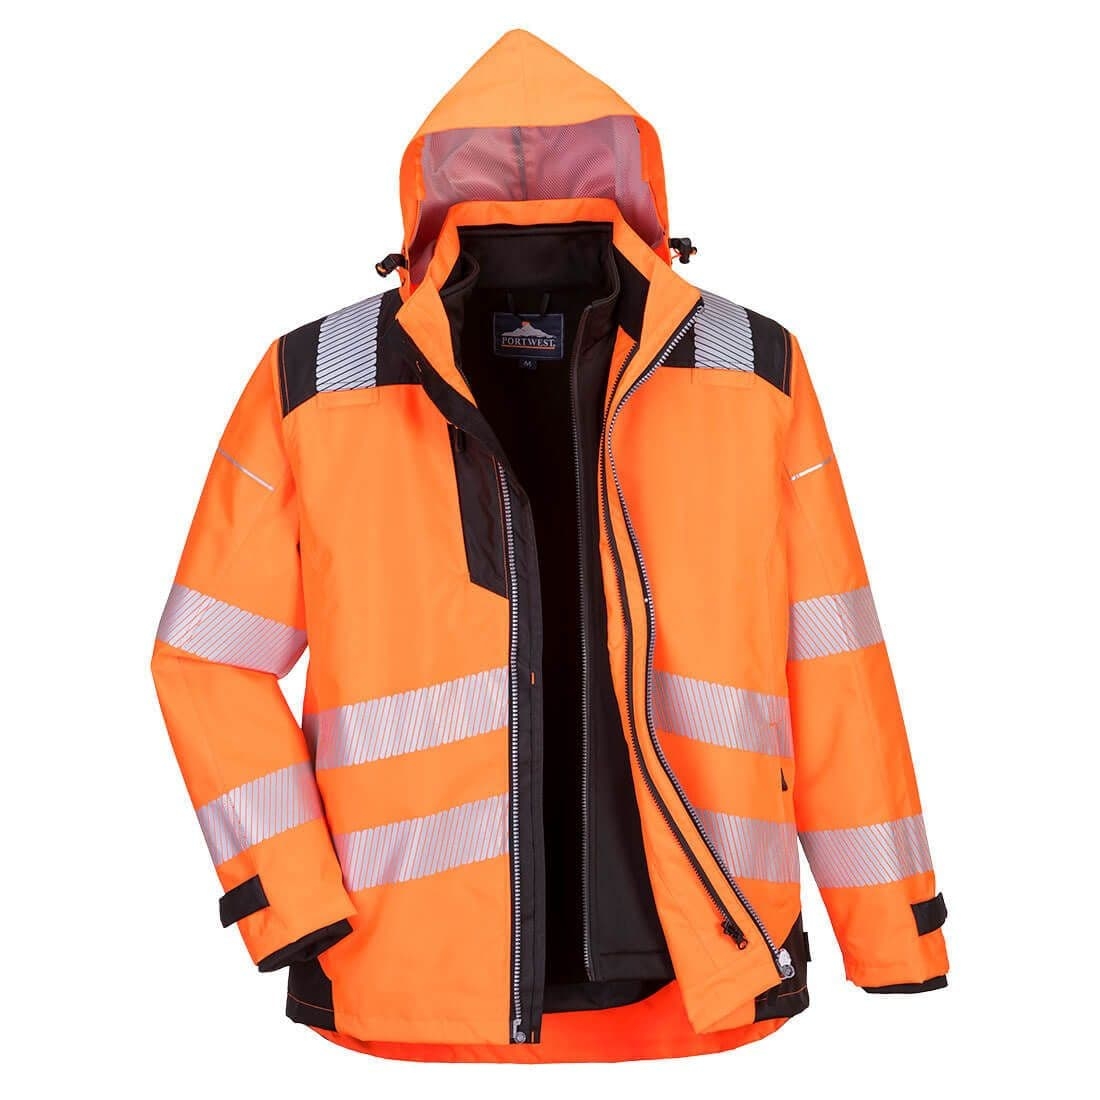 Portwest PW3 Hi-Vis 3-in-1 Jacket – Orange/Black – 4XL – High Visibility – Lightweight – Durable – Slip/Water Resistant – PPE – Taft Safety Store